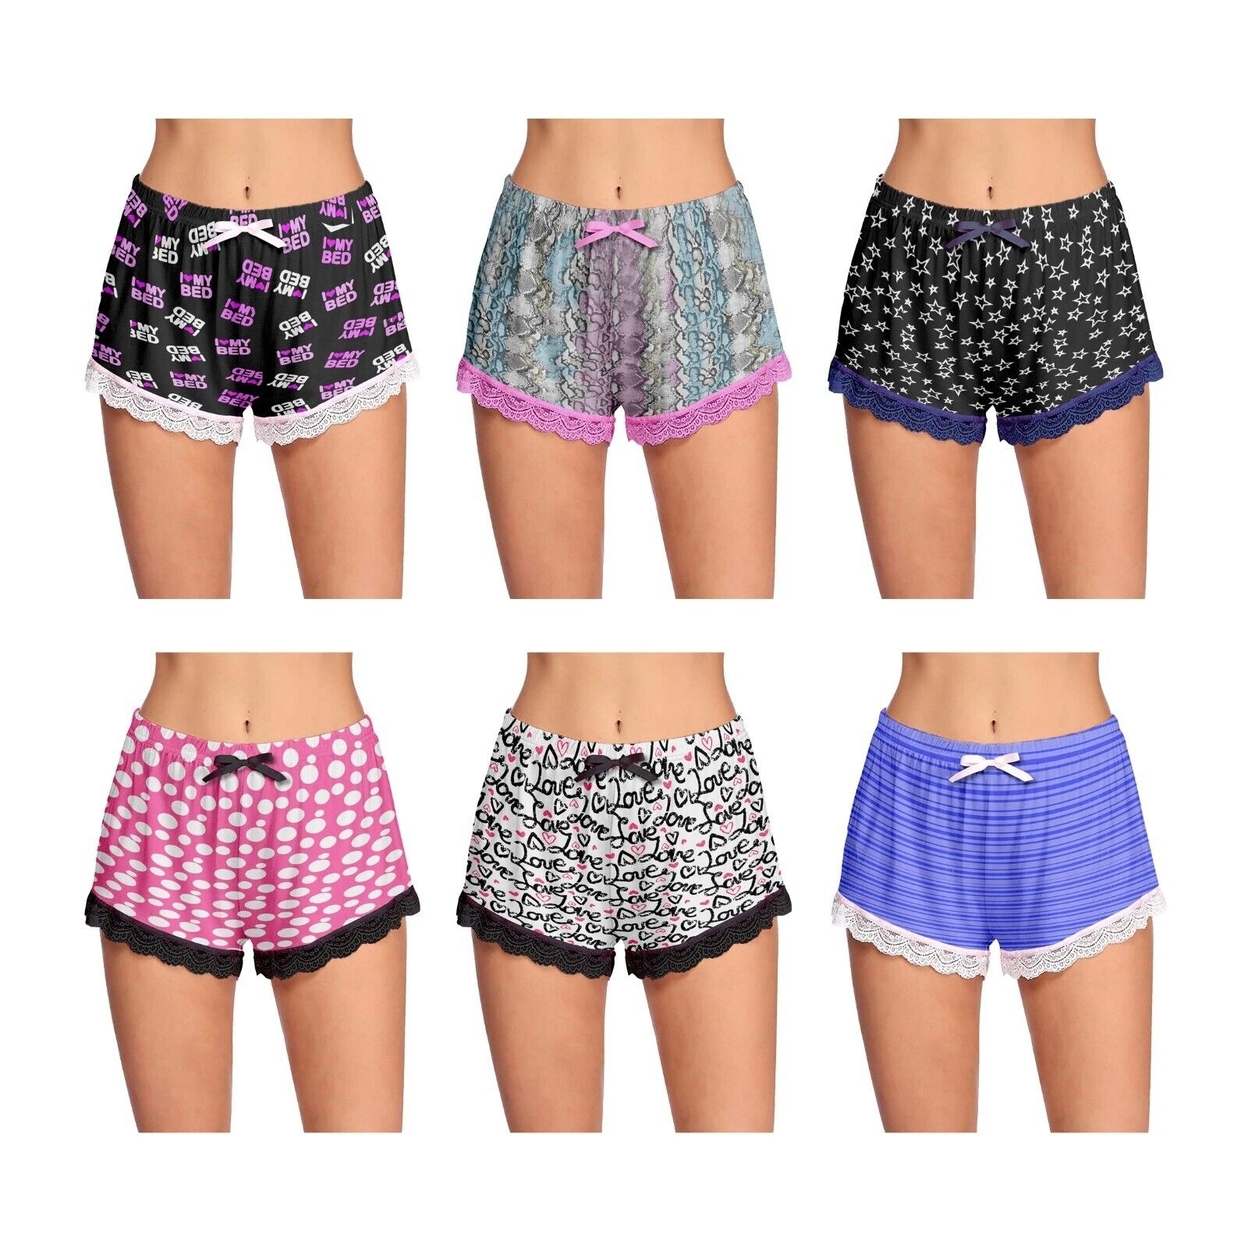 2-Pack: Women's Ultra-Soft Cozy Fun Printed Lace Trim Pajama Lounge Shorts - Small, Animal